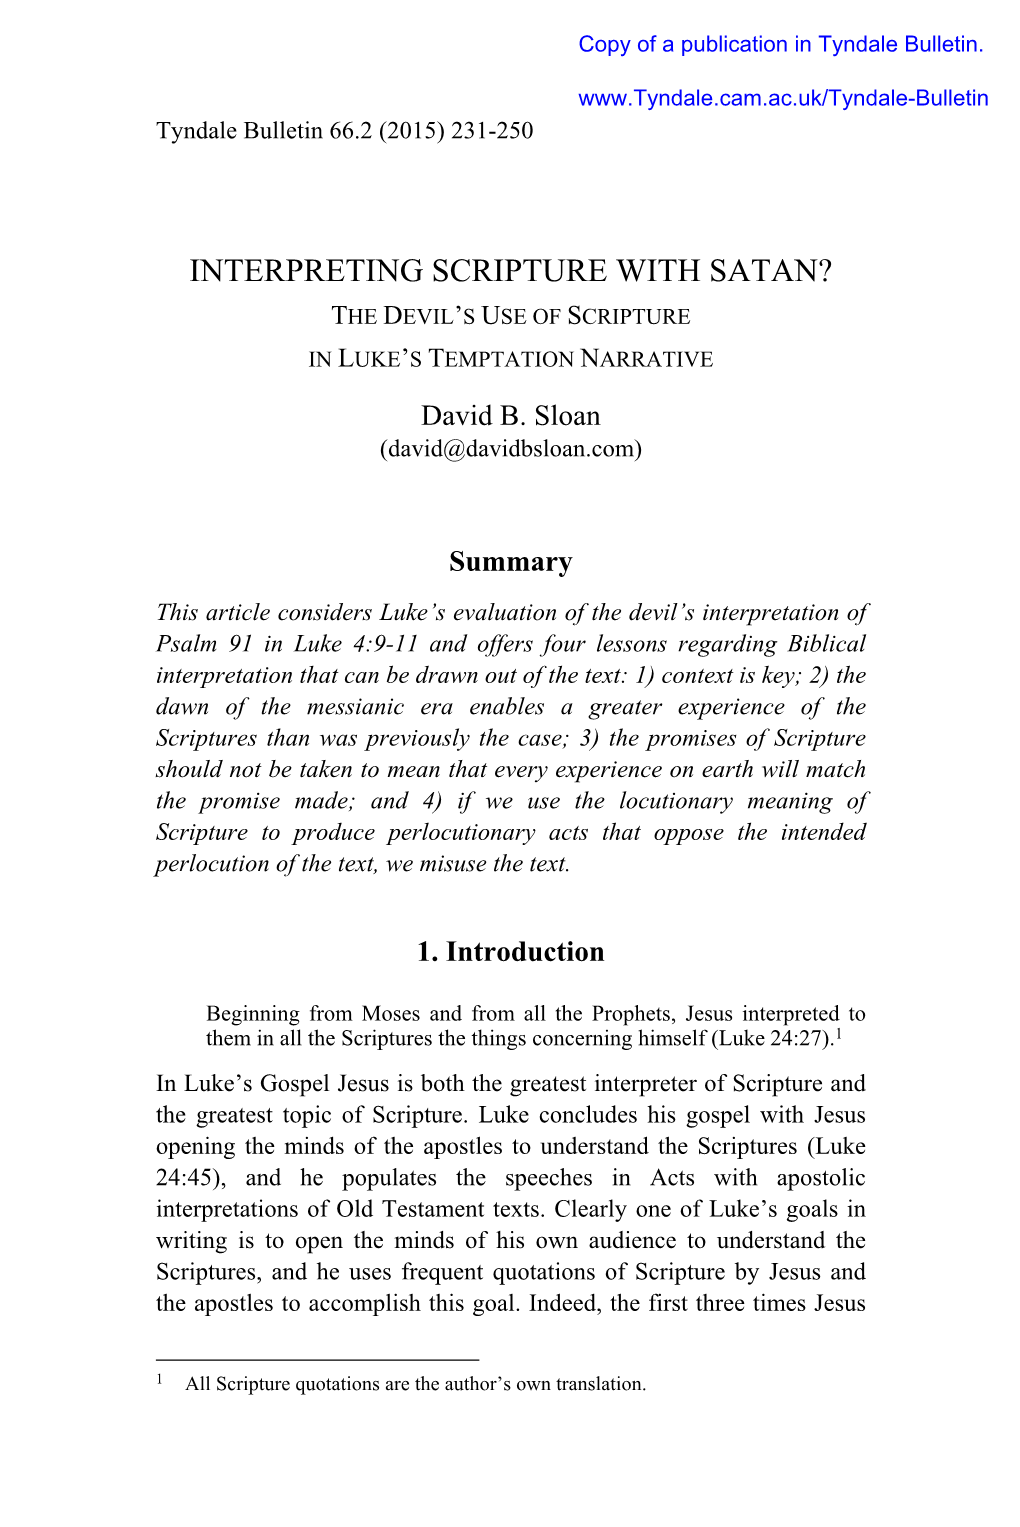 Interpreting Scripture with Satan? the Devil’S Use of Scripture in Luke’S Temptation Narrative